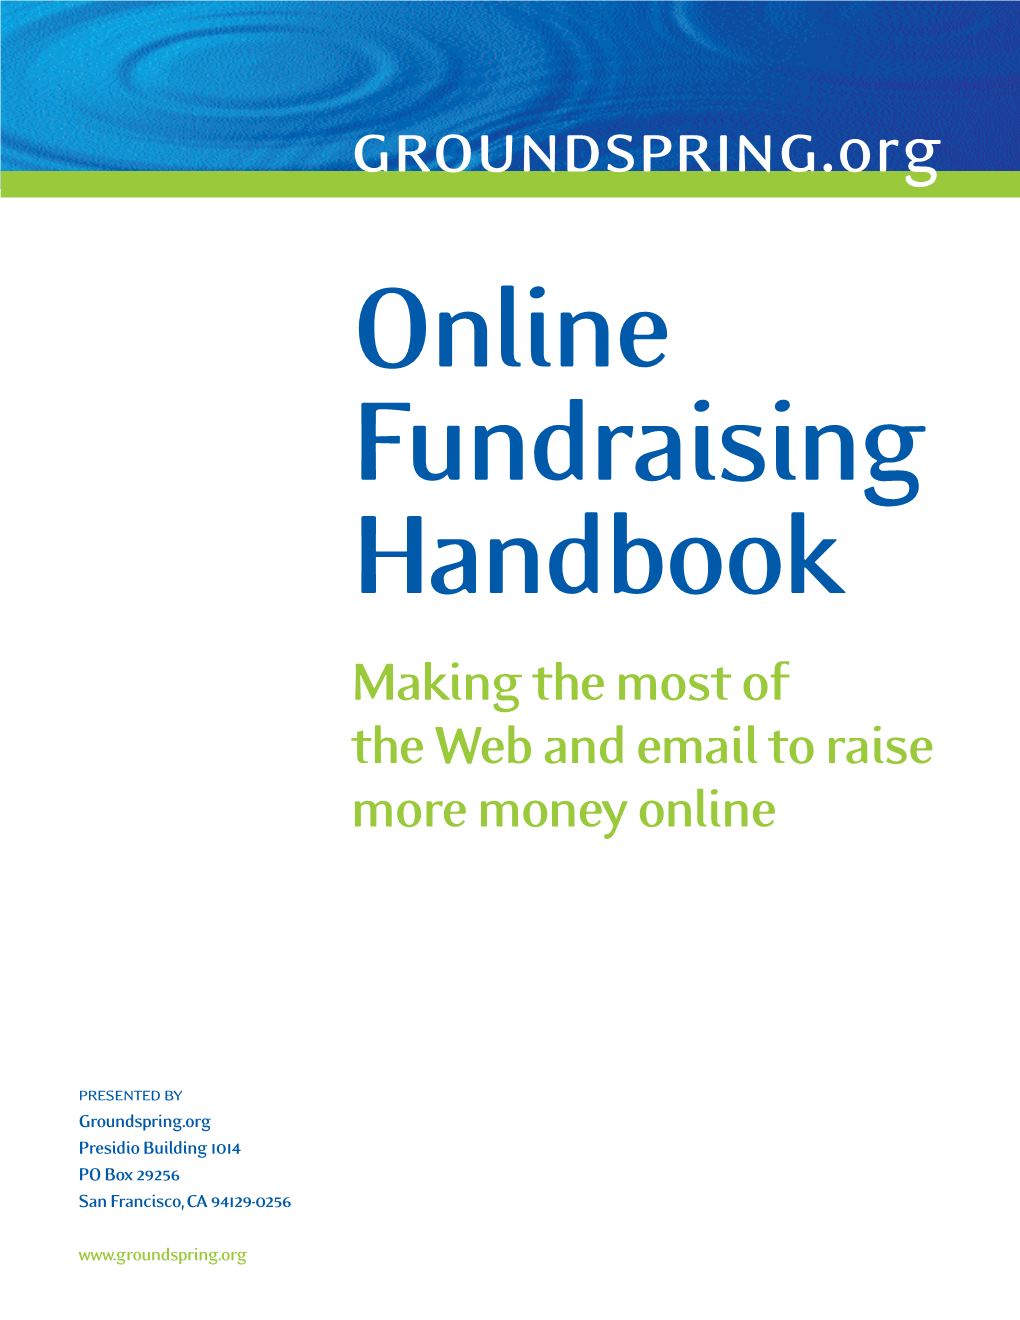 Groundspring Online Fundraising Handbook